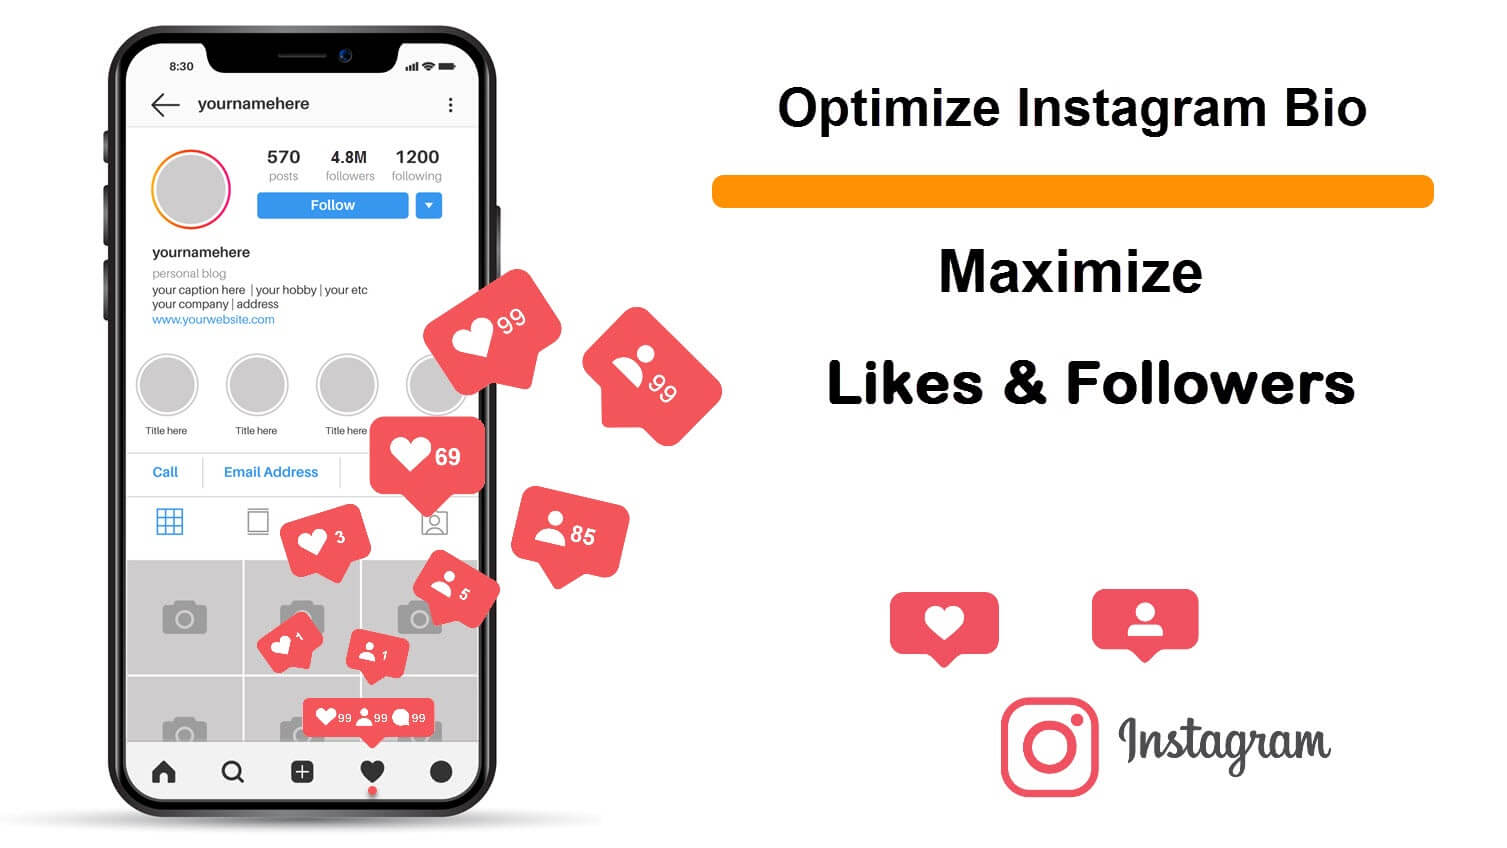 Optimize Instagram Description and Bio